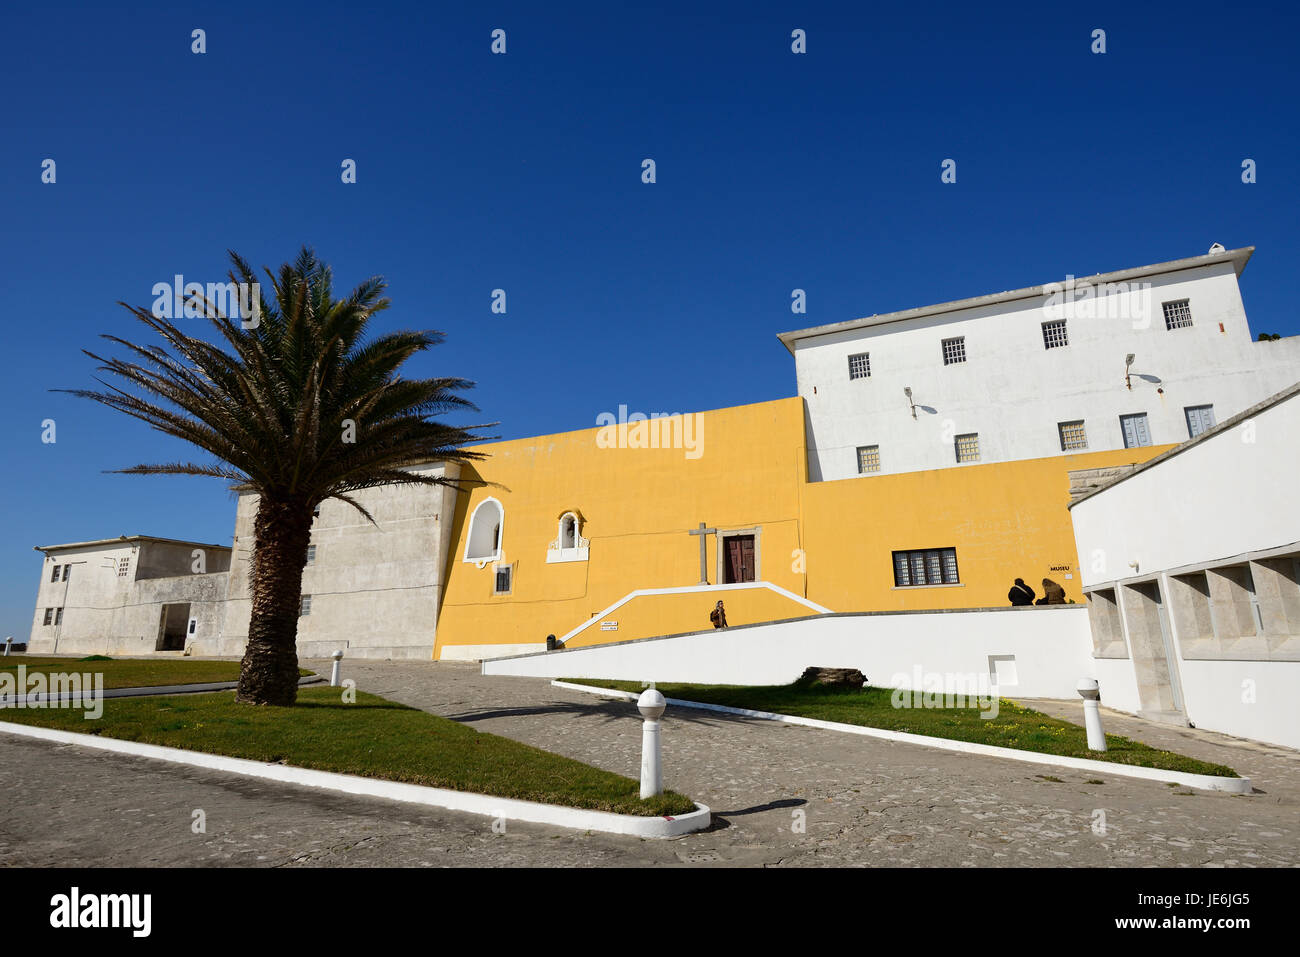 Peniche fortress, a former political prison, now open to the public. Portugal Stock Photo